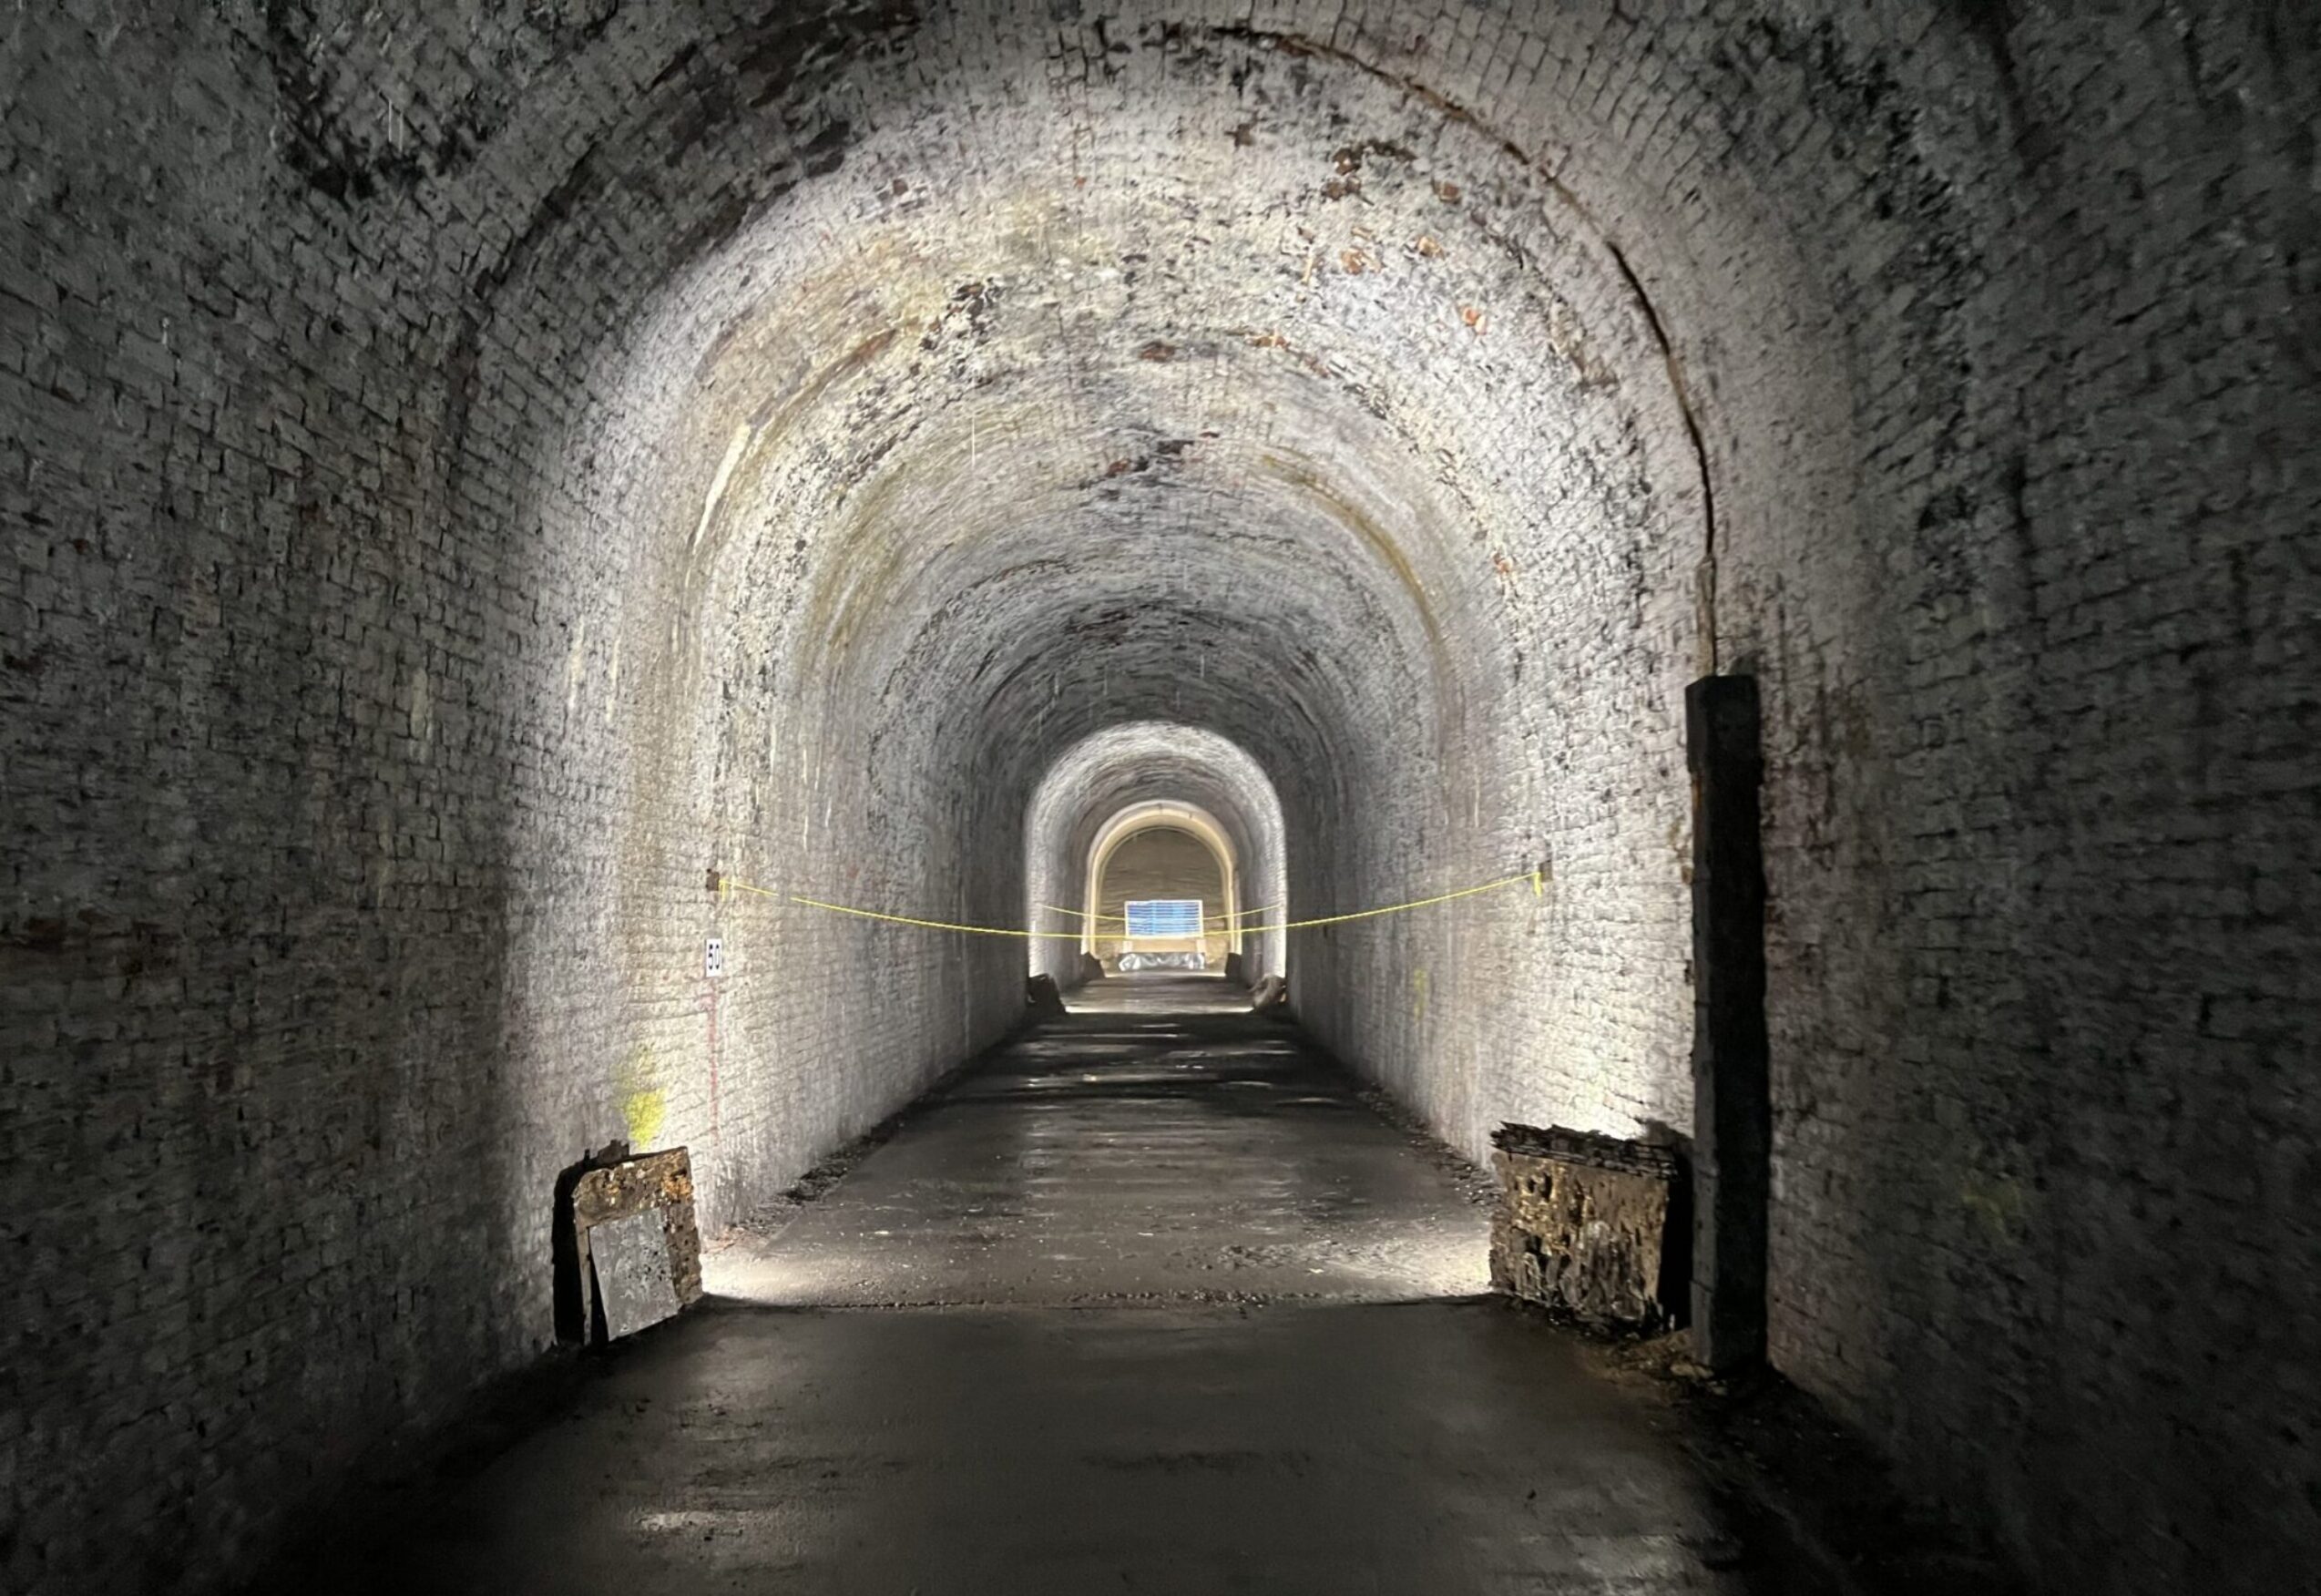 Vaynol tunnels